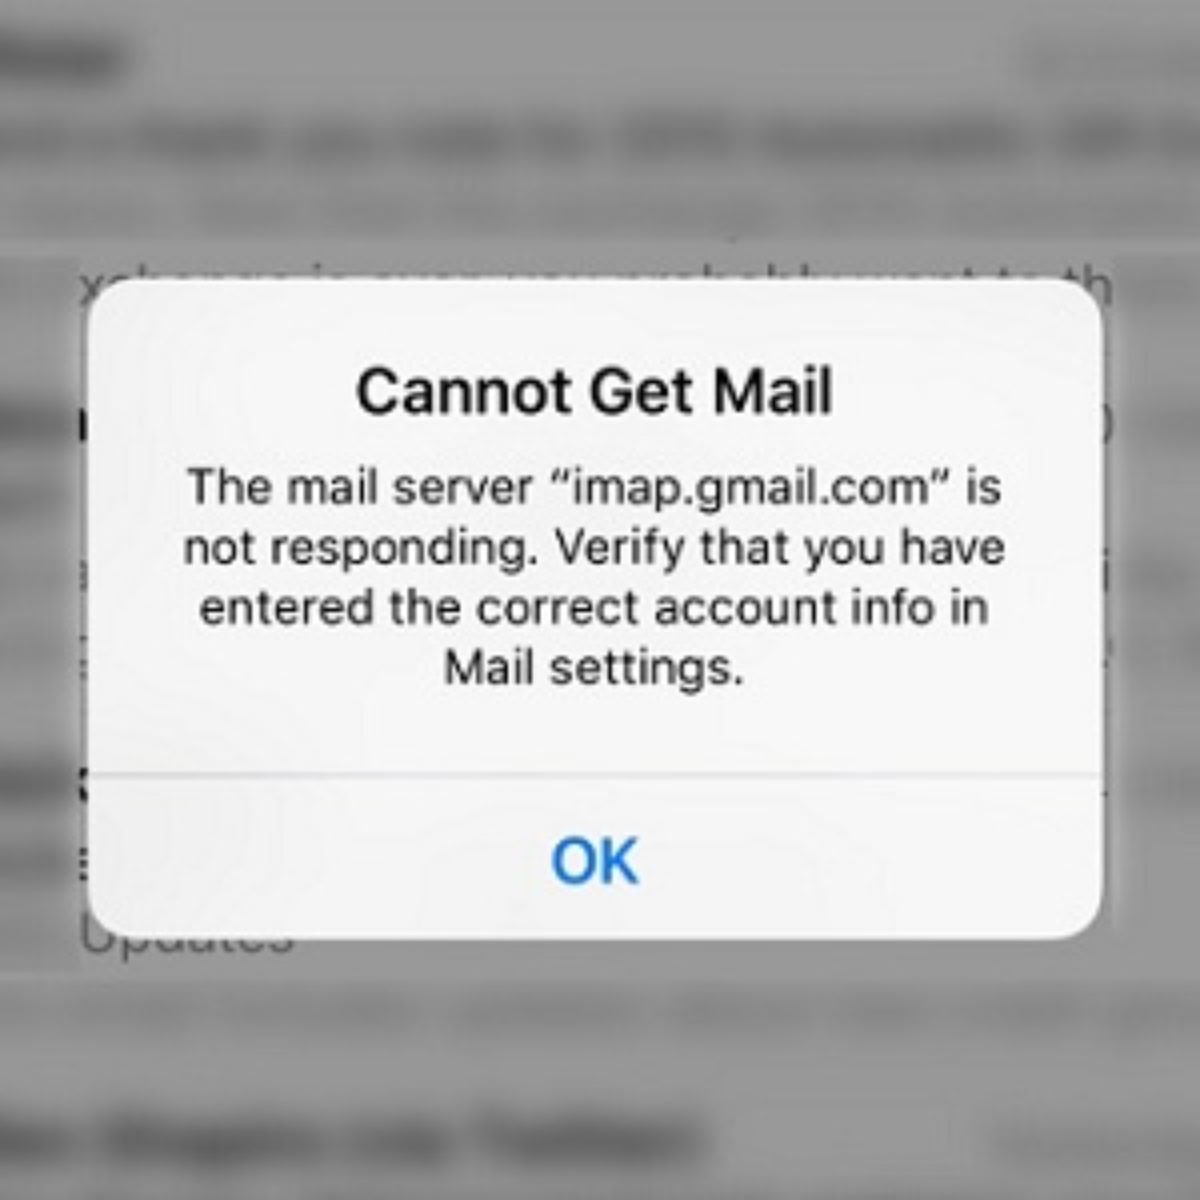 imap.gmail.com is not responding